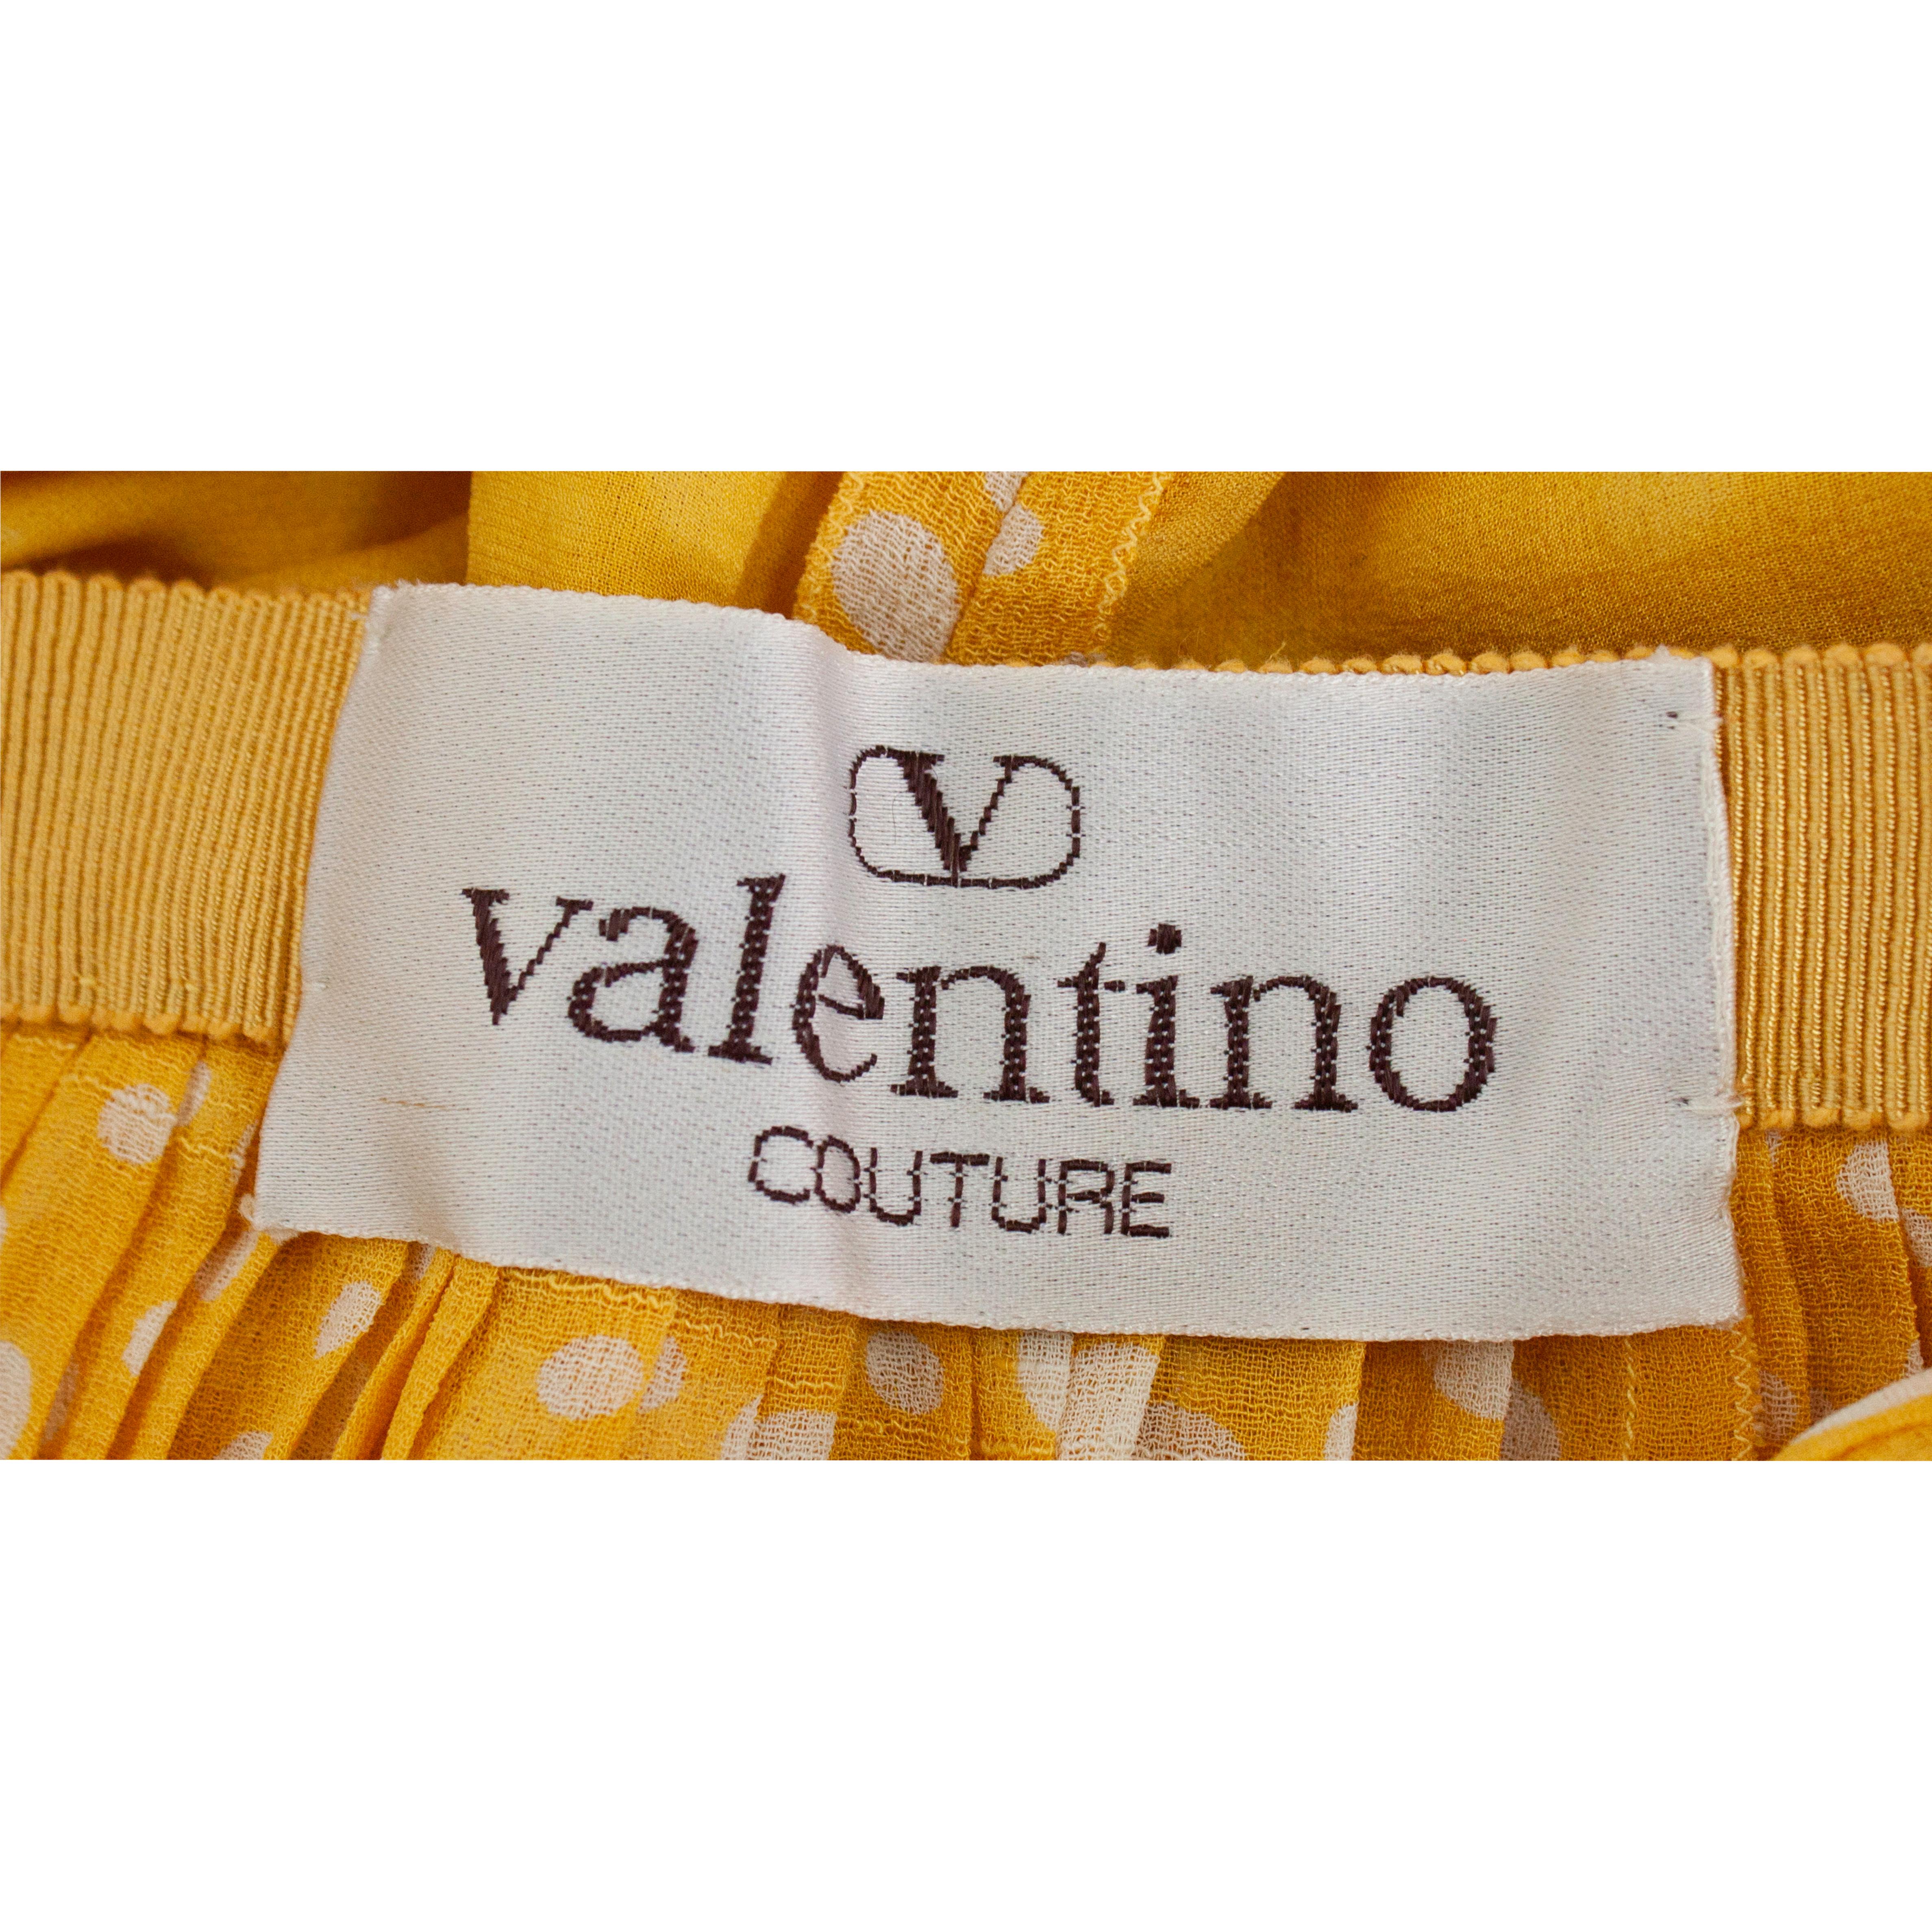 Valentino couture yellow silk chiffon dress. circa 1970s 1